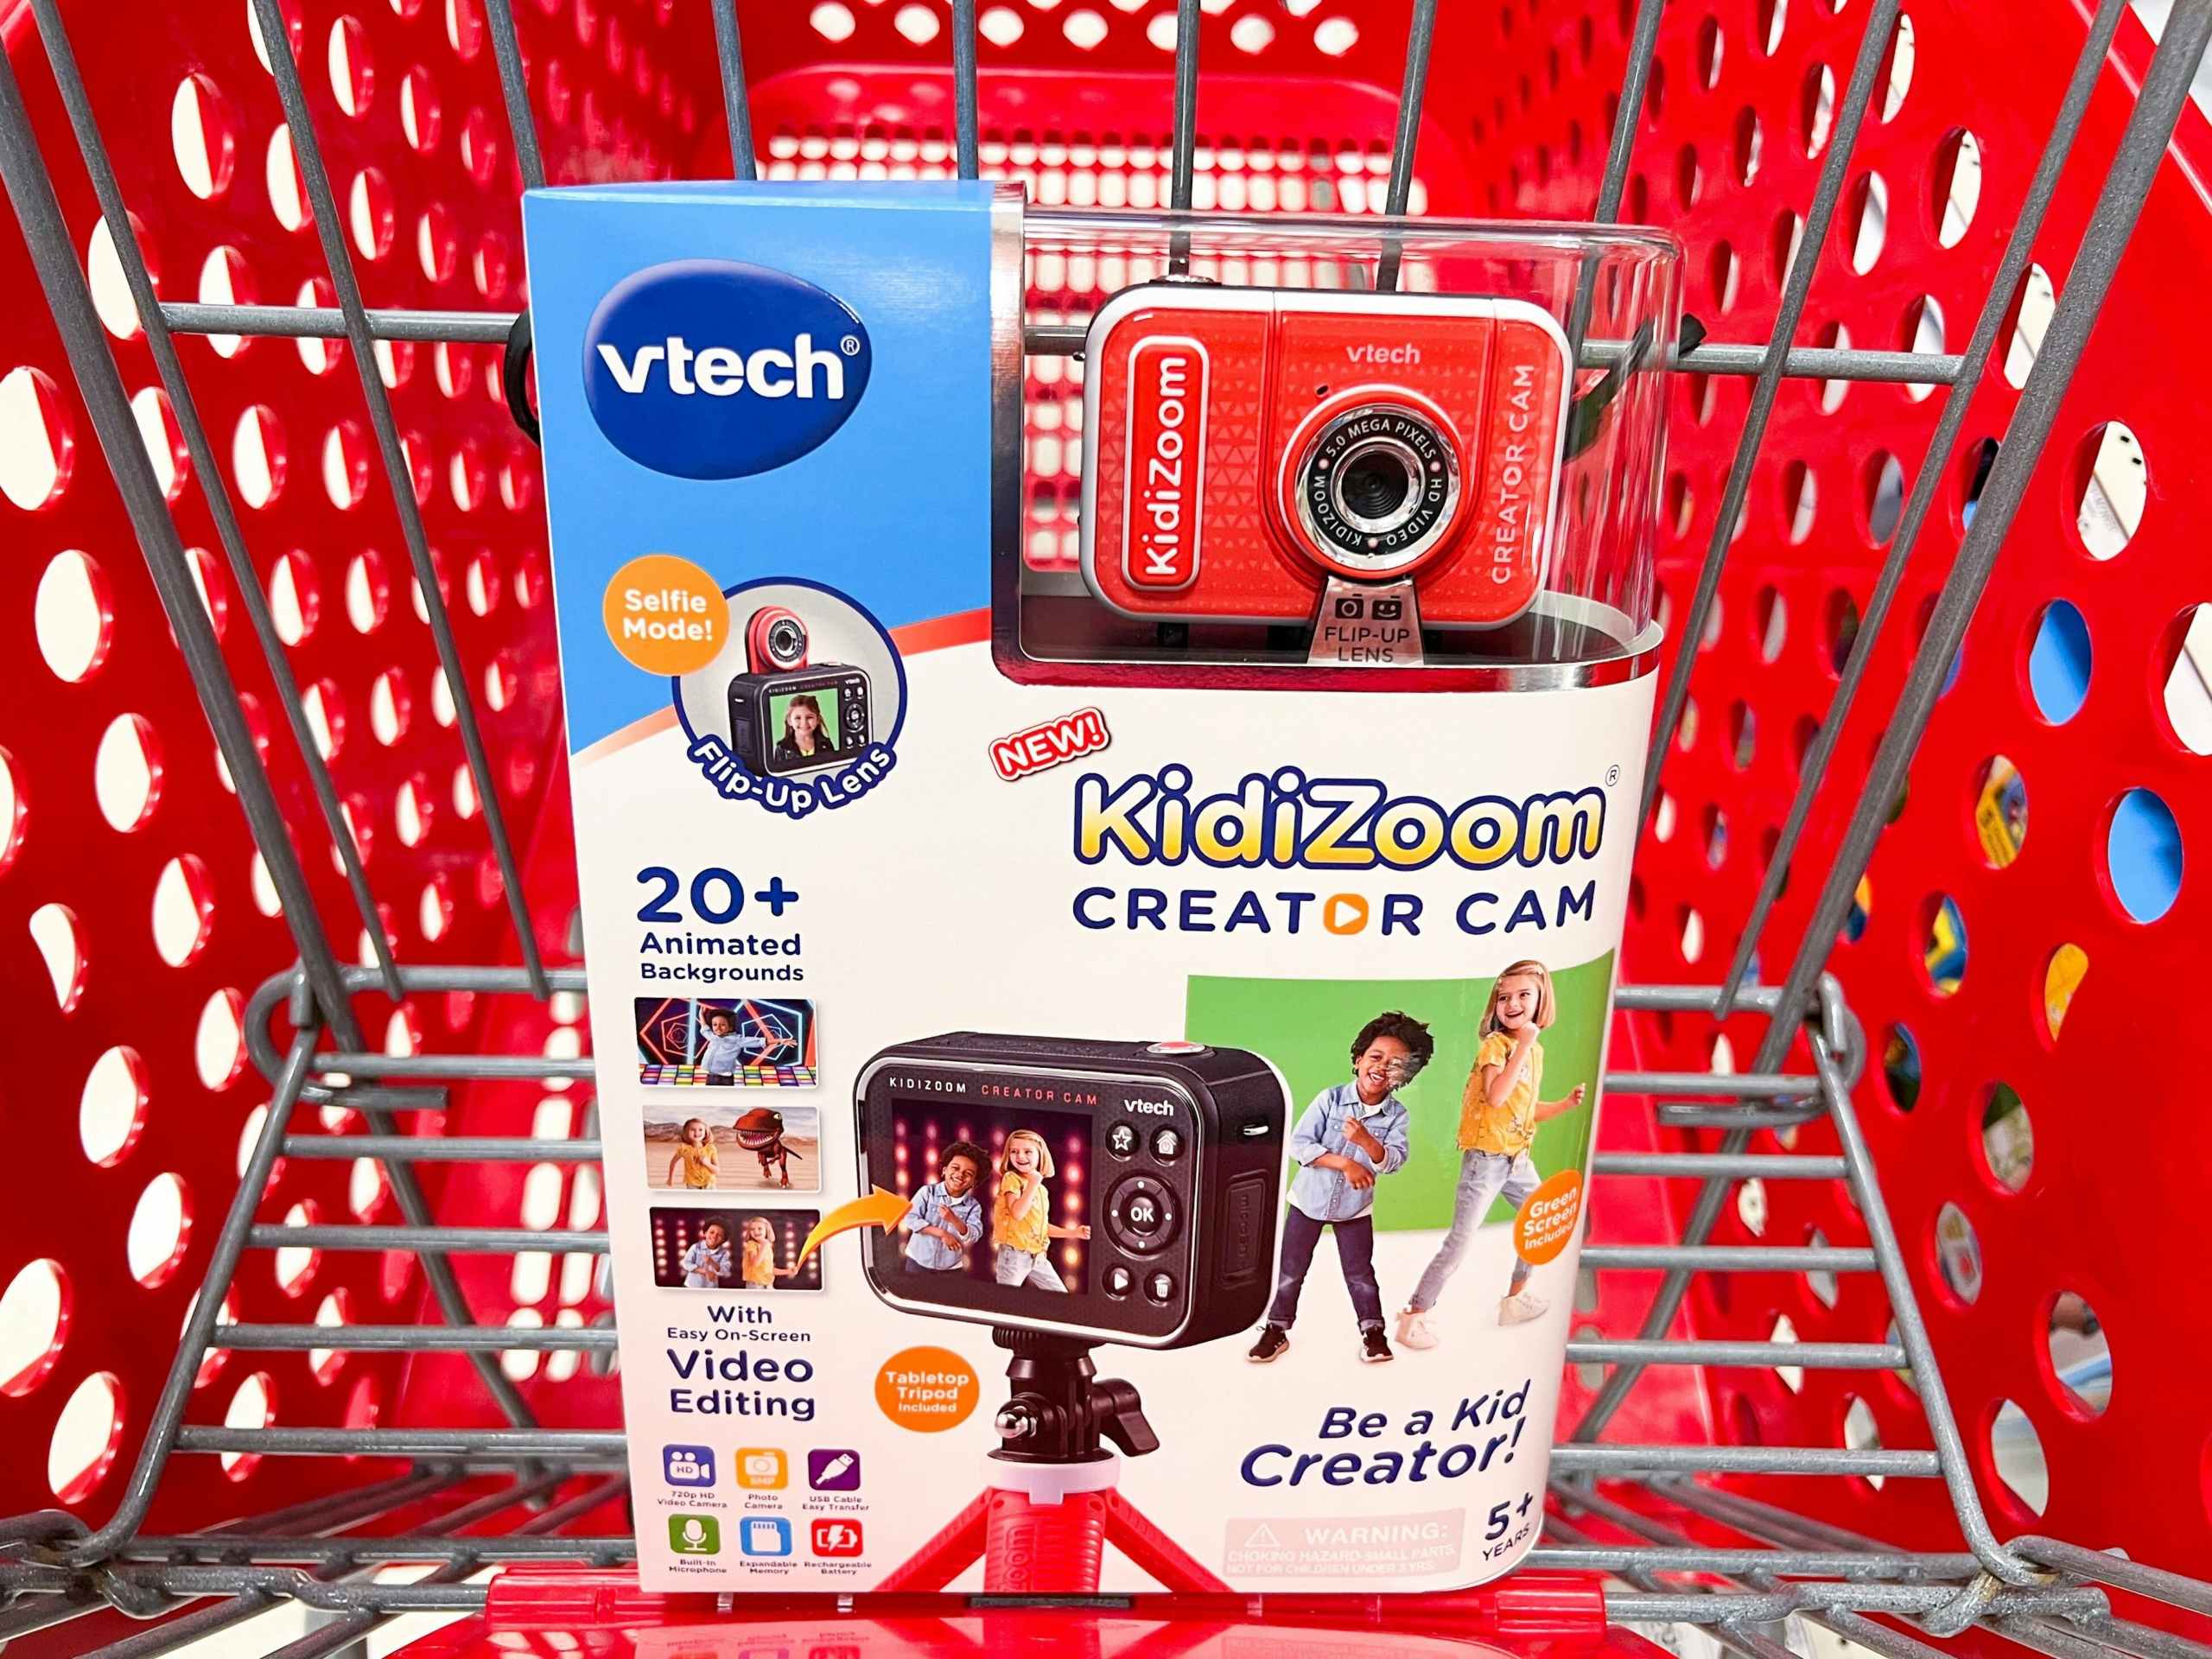 vtech kidizoom creator cam in a target cart